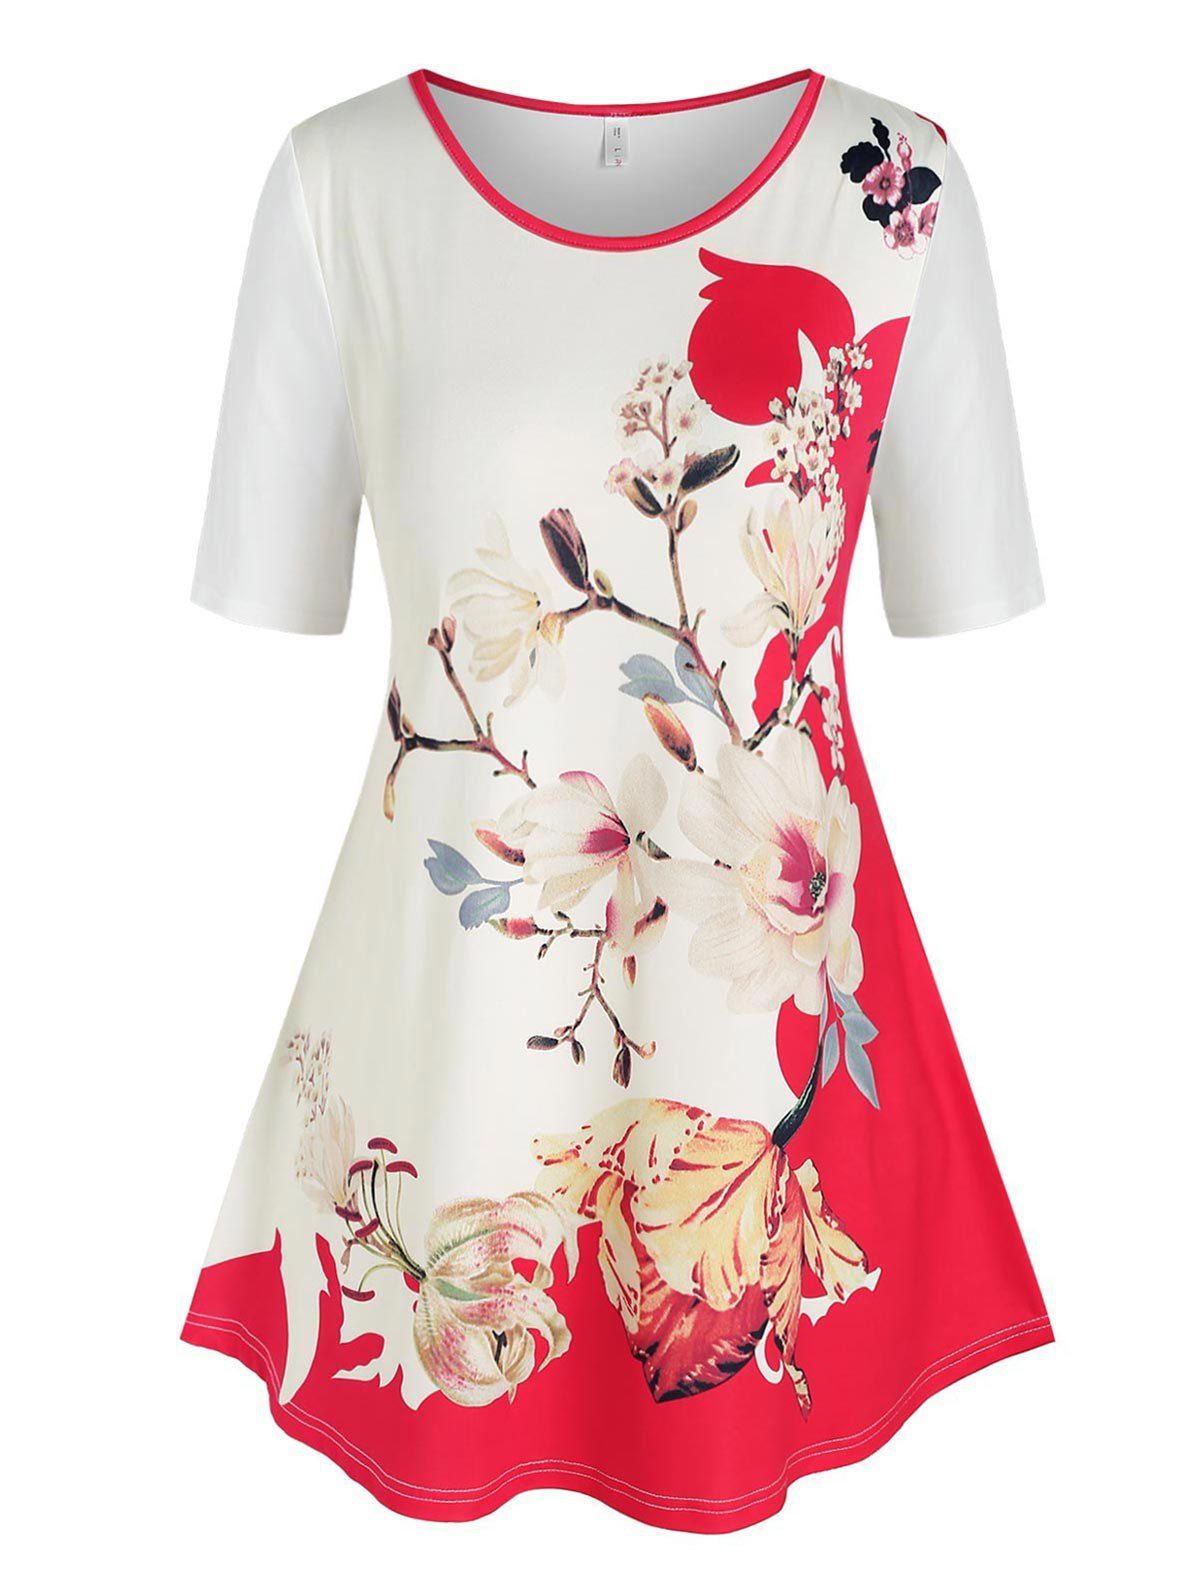 Plus Size Floral Print Tunic Tee - WHITE L